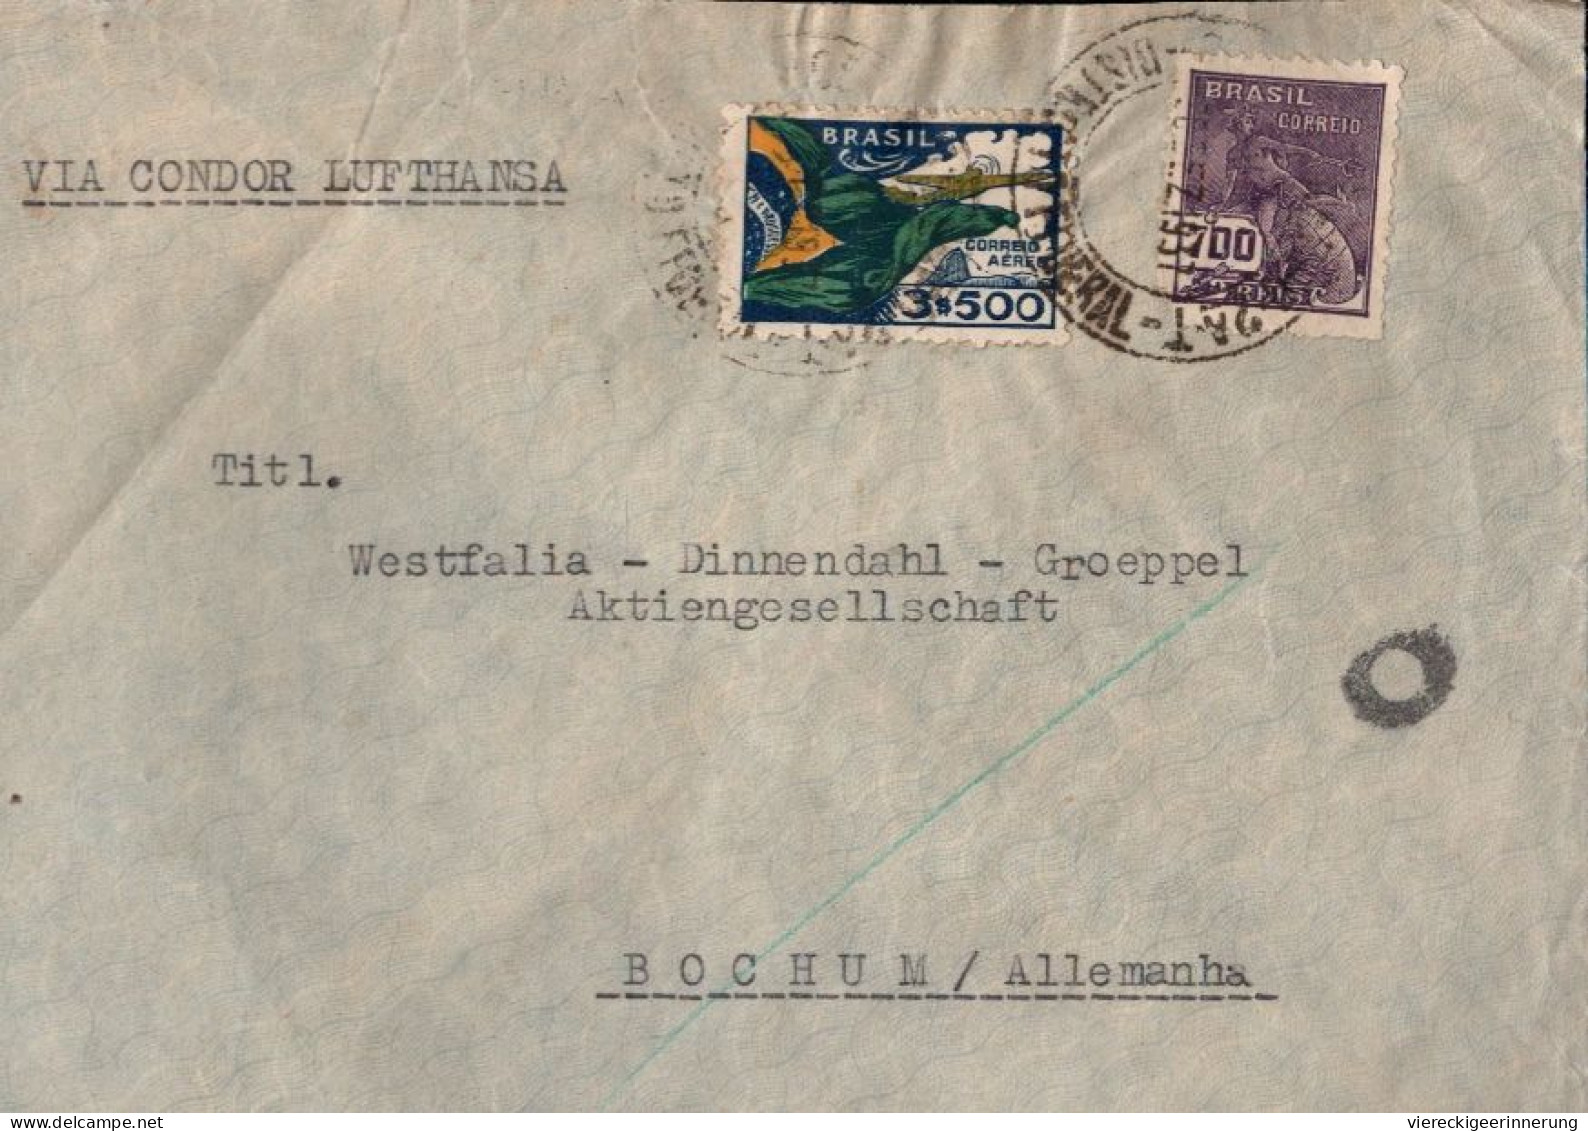 ! Luftpostbrief, Airmail Cover, 1937 Aus Rio De Janeiro, Brasilien, Via Condor Lufthansa, Nach Bochum - Luchtpost